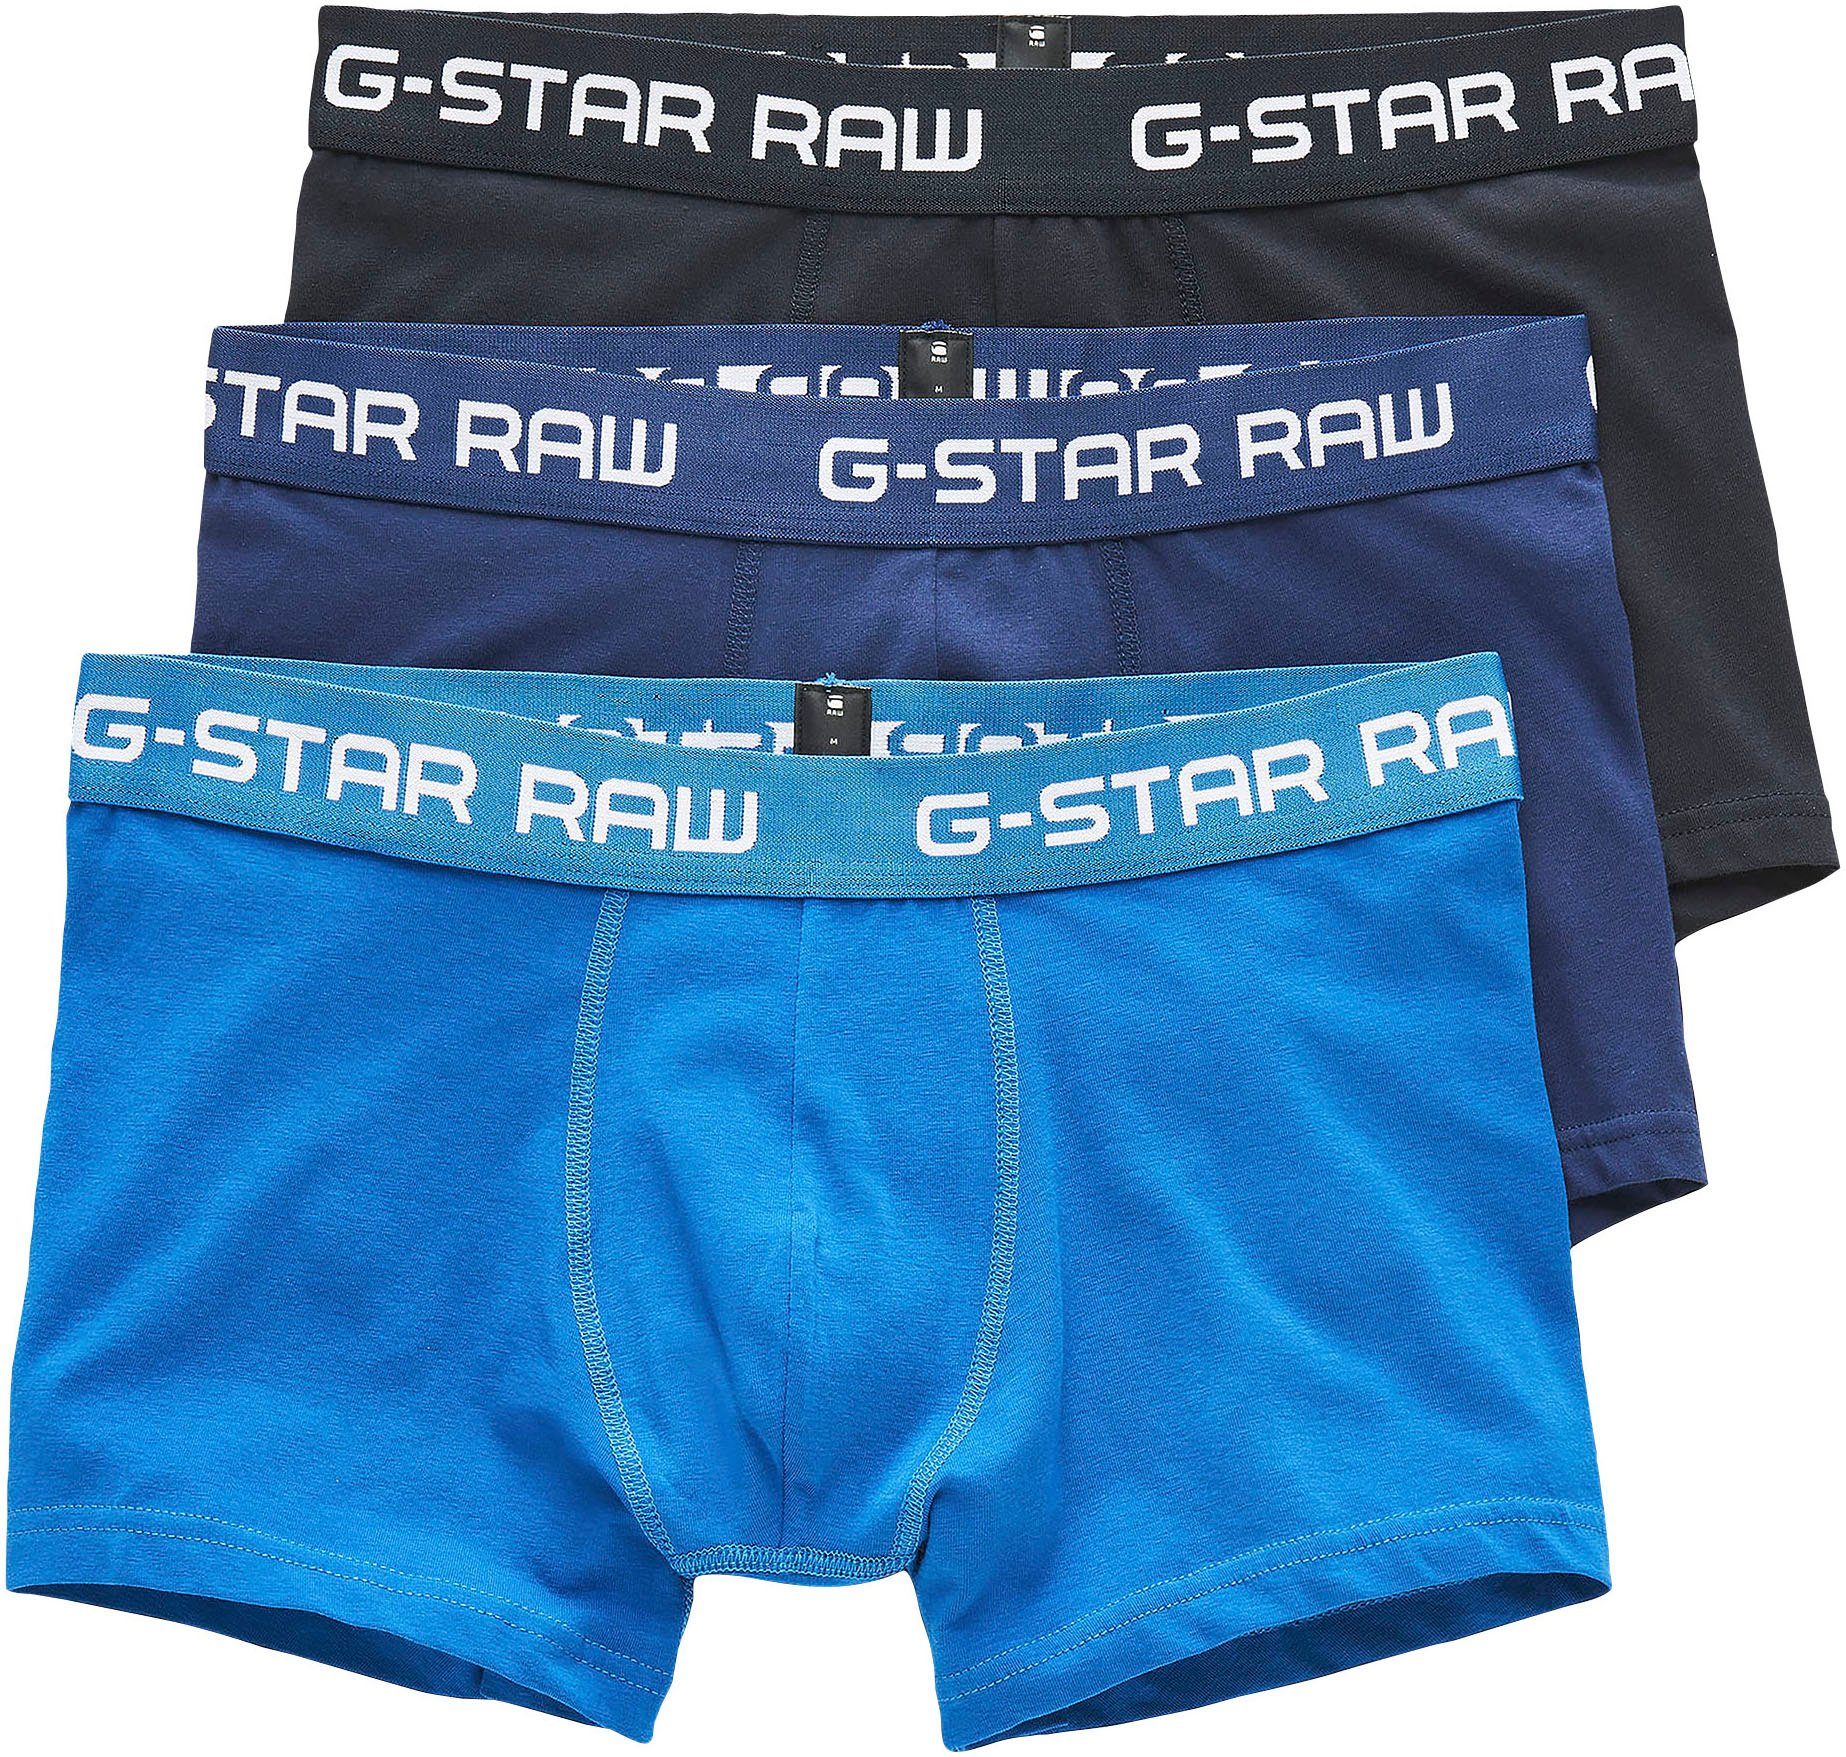 RAW blau, pack (Packung, Classic marine Boxer aquablau, 3er-Pack) 3 3-St., trunk G-Star clr